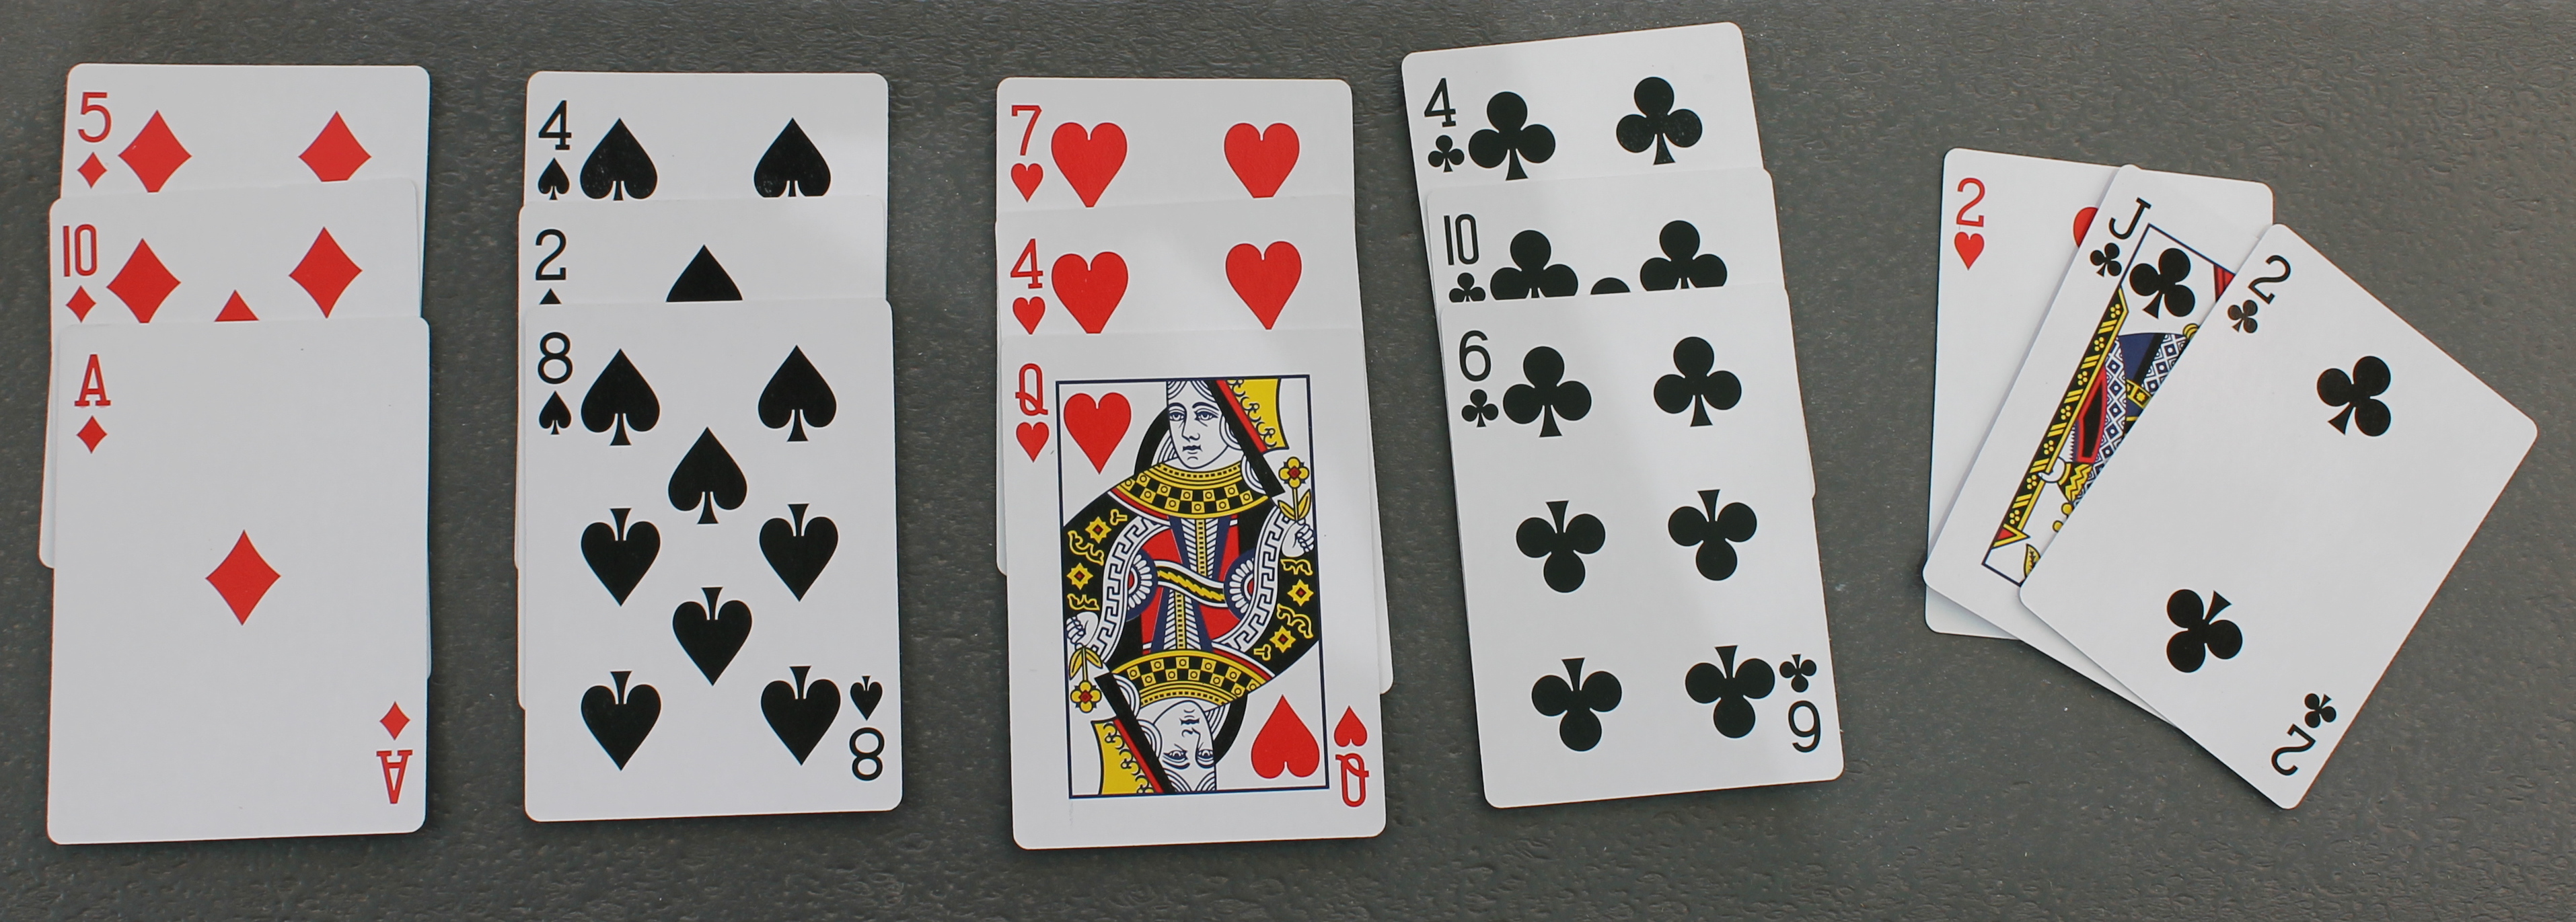 Fifteen cards, three diamonds, three spades, four hearts, five clubs.